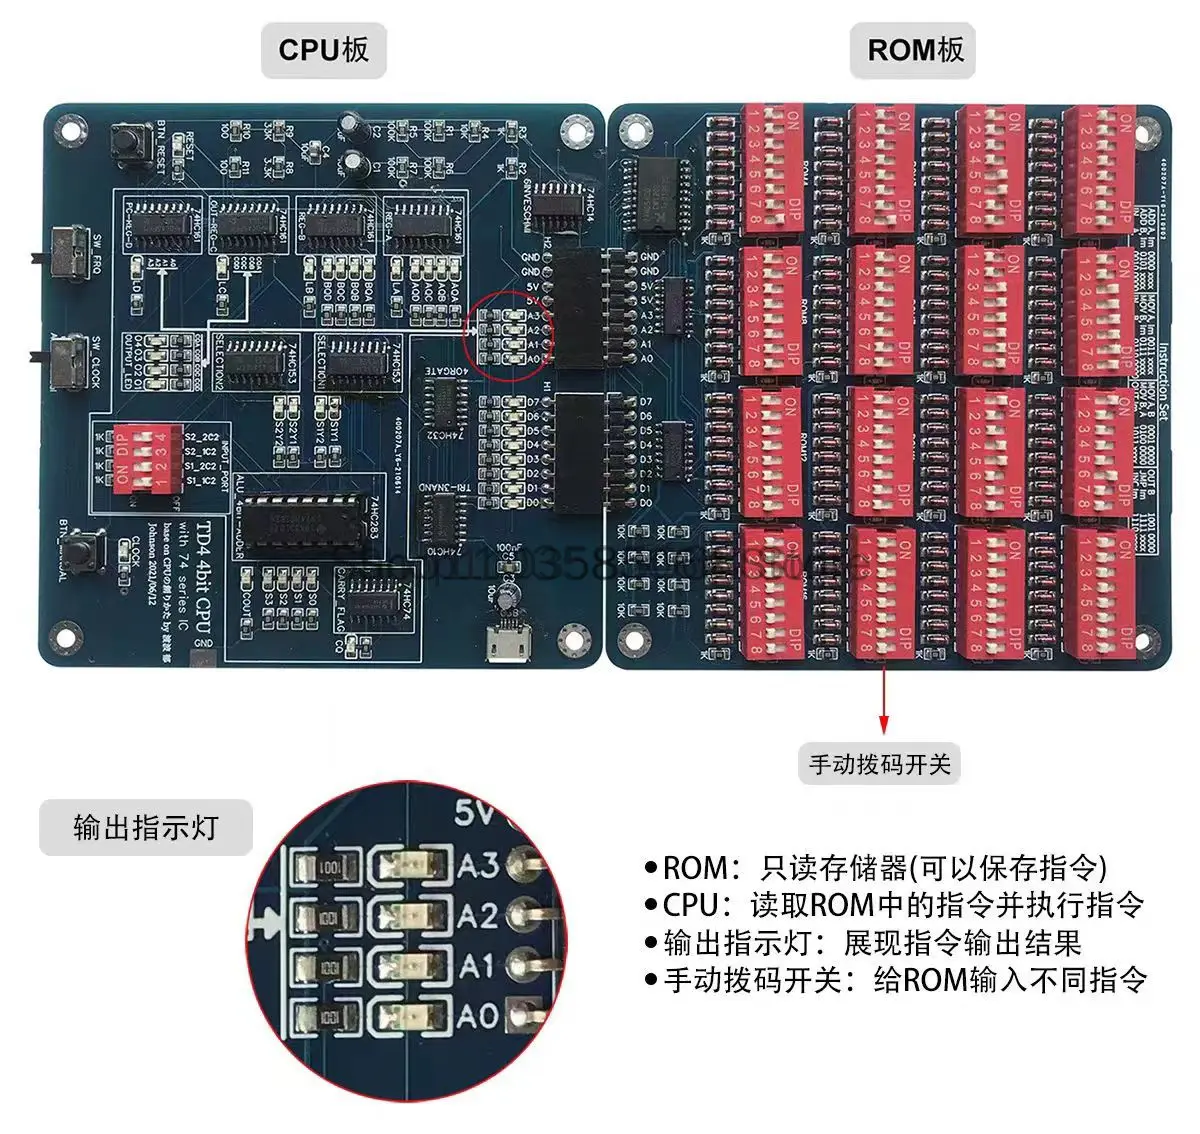 

4Bit TD4 CPU Self-made Introduction 74 Series Chip Logic Circuit Design CPU Operating Principle Learning